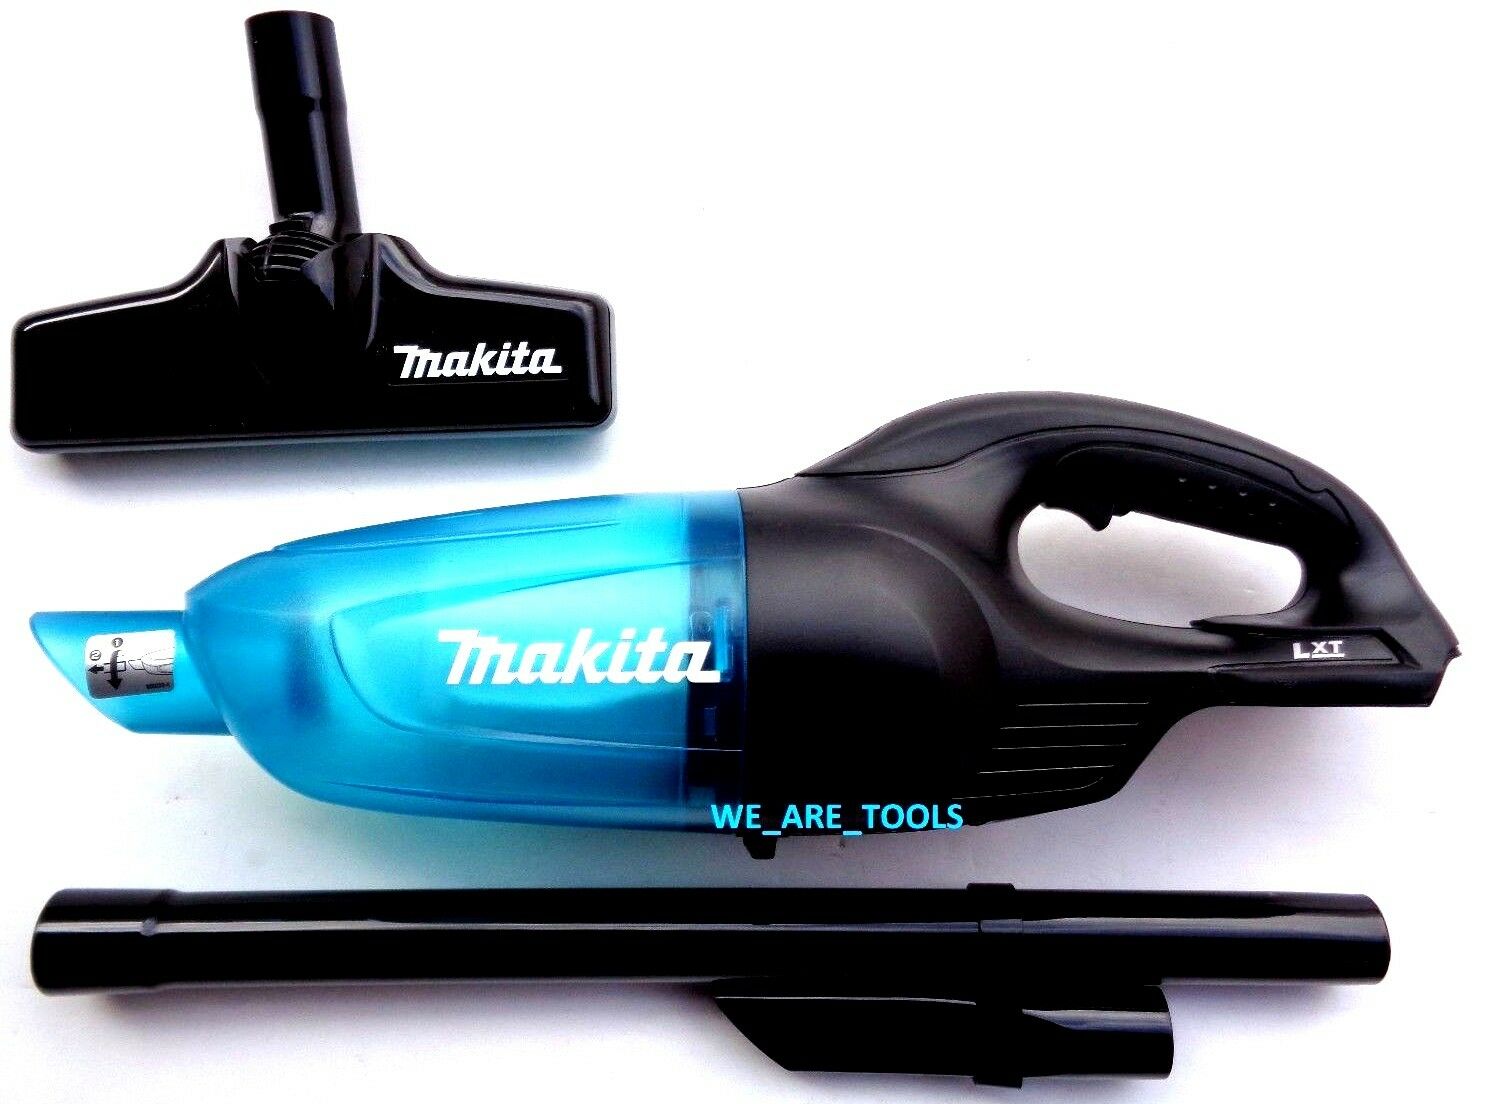 New Makita Xlc02zb 18v Cordless Battery Vacuum Compact Tool Only 18 Volt Lxt